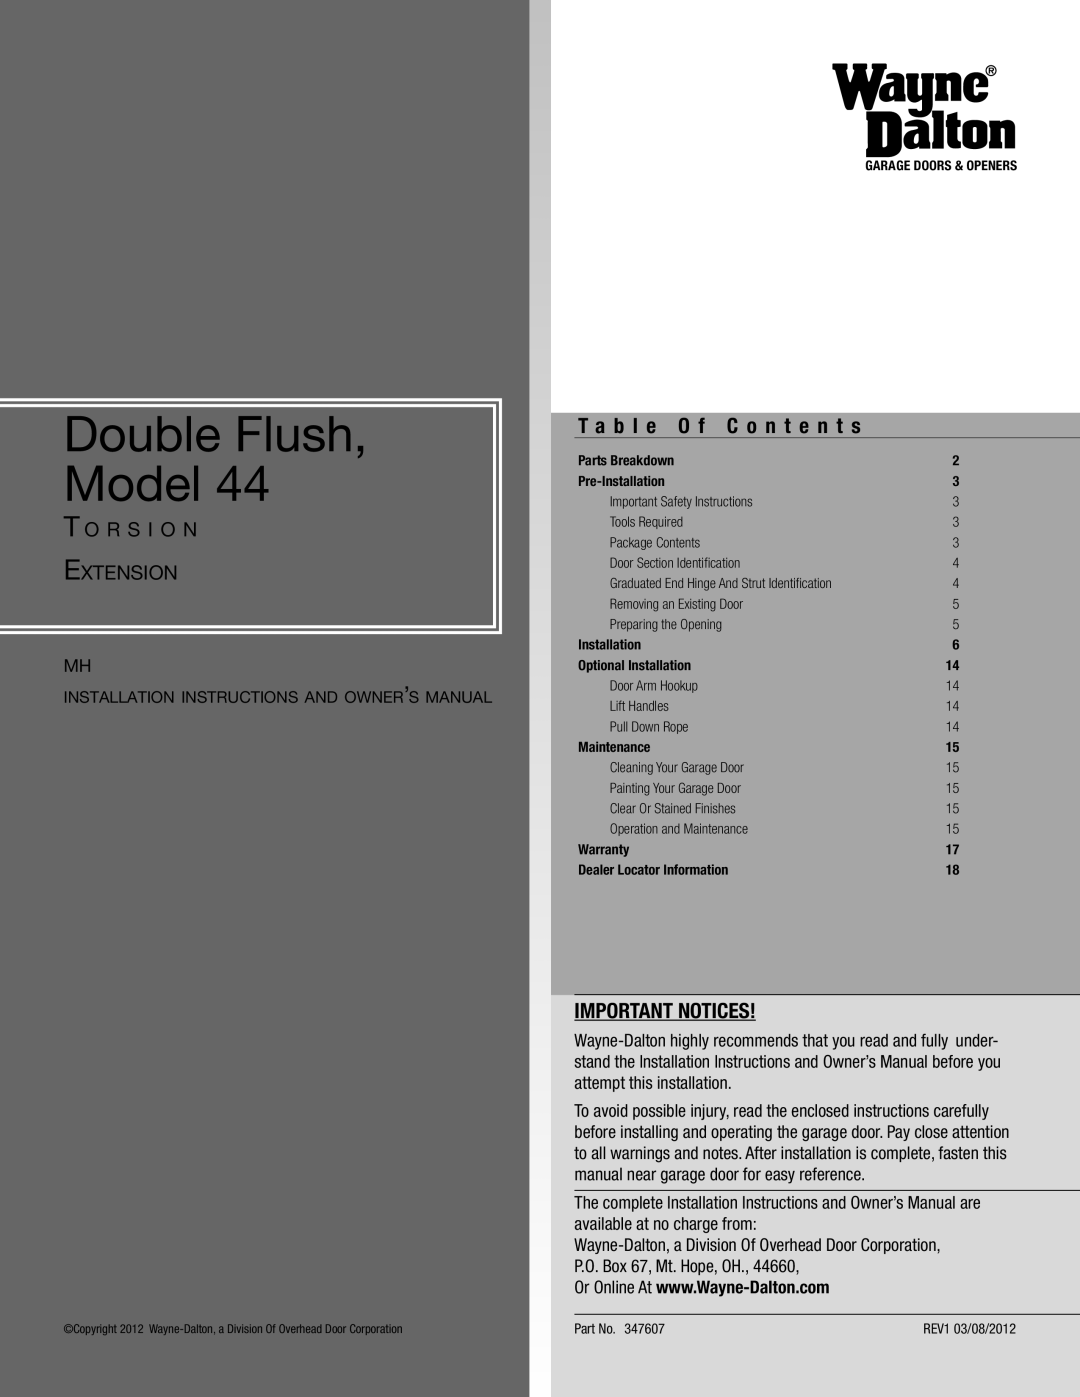 Wayne-Dalton 44 installation instructions T a b l e O f C o n t e n t s, Important Notices, Double Flush Model 